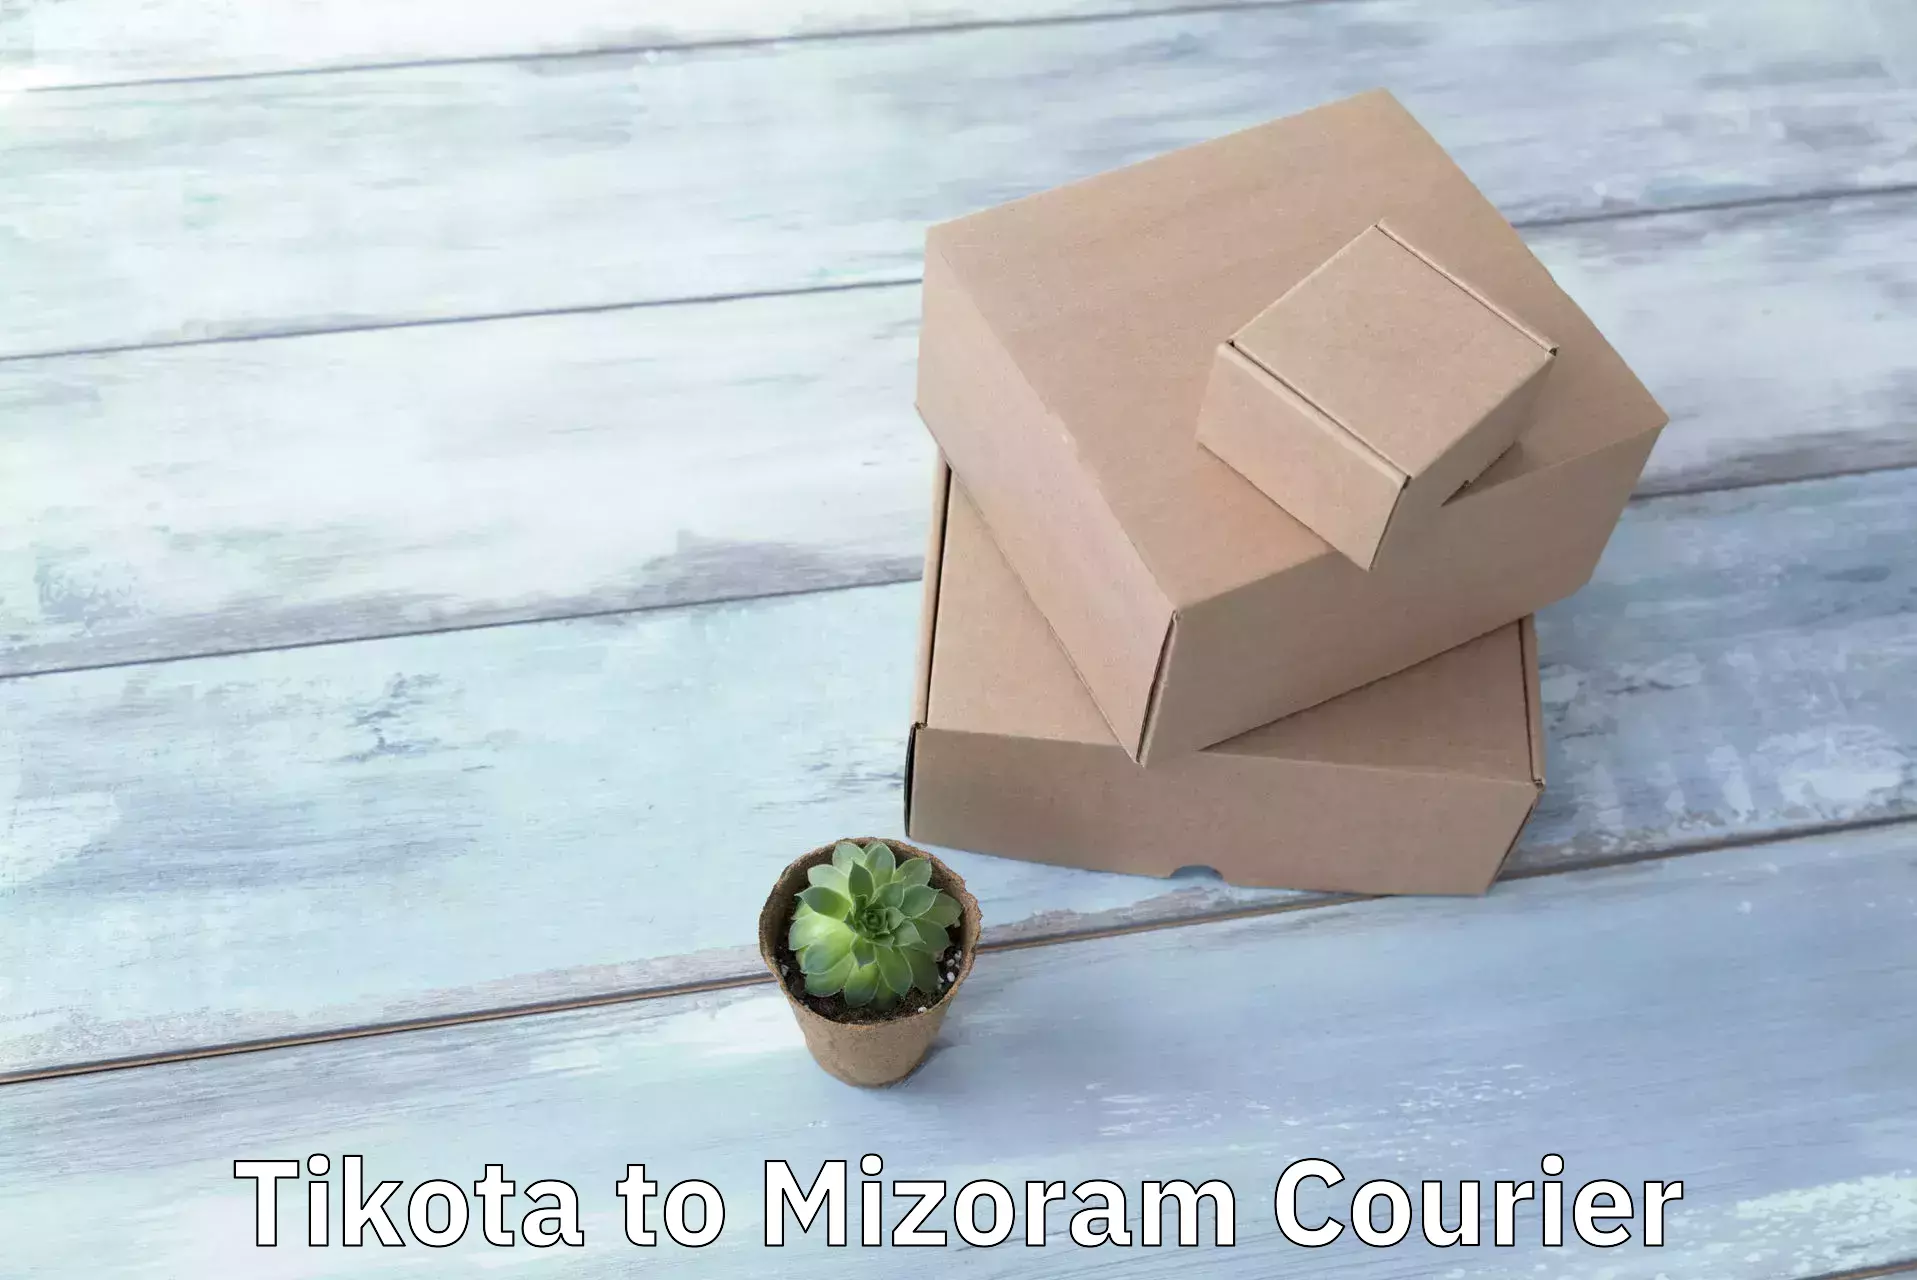 International courier networks Tikota to Mizoram